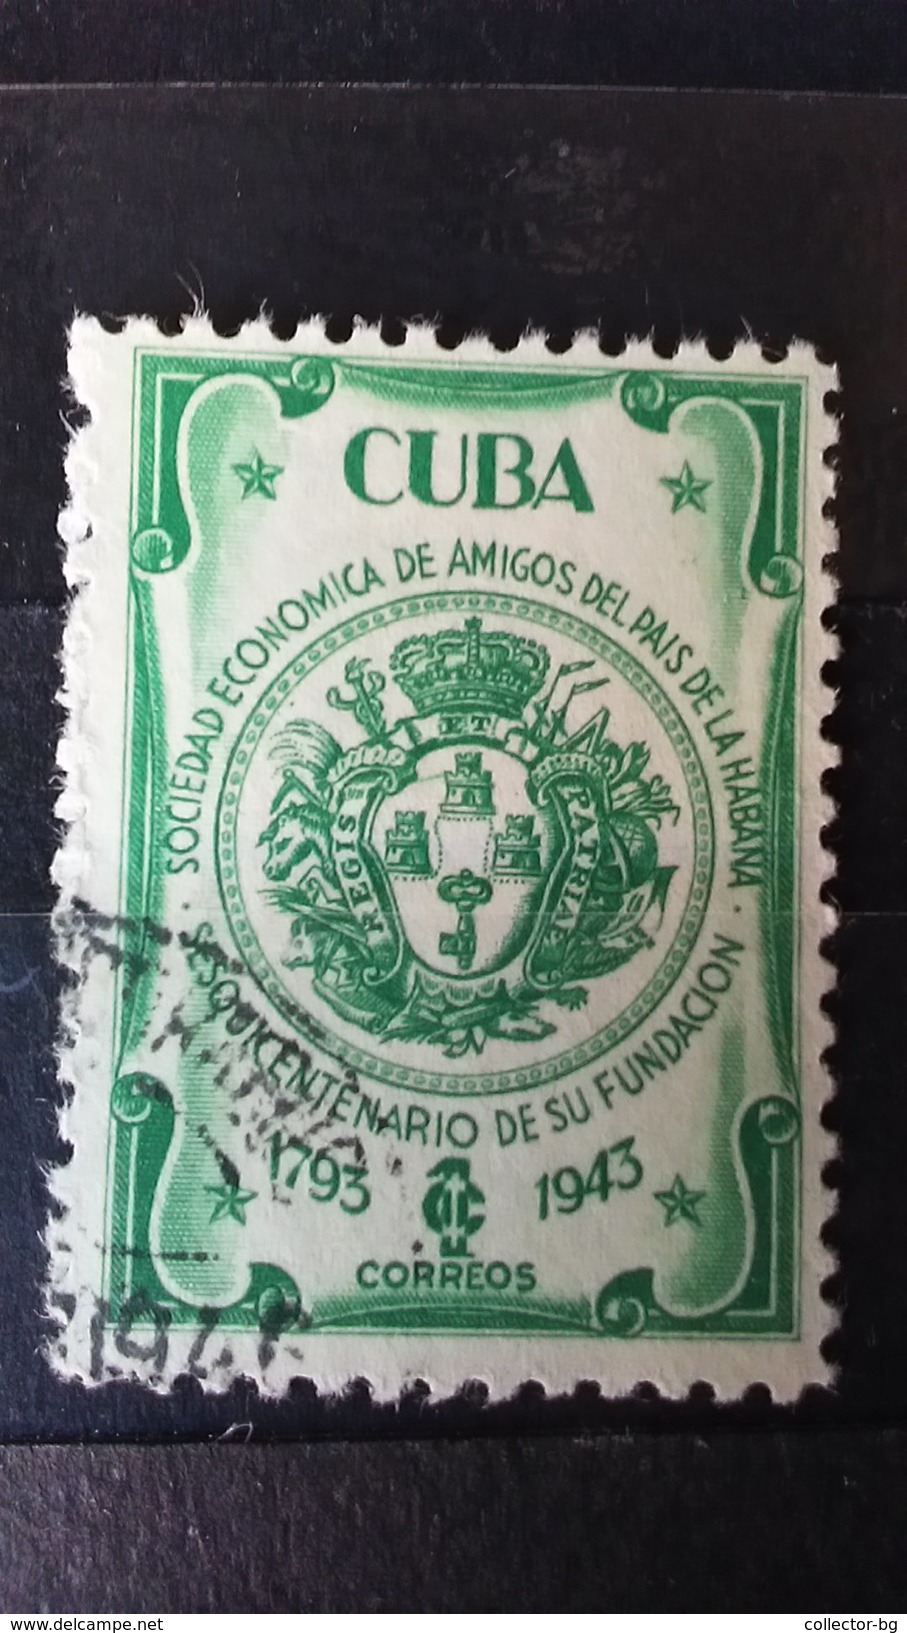 RARE 1C CORREOS  CUBA 1793-1943 ECONOMICA USED STAMP TIMBRE - Oblitérés